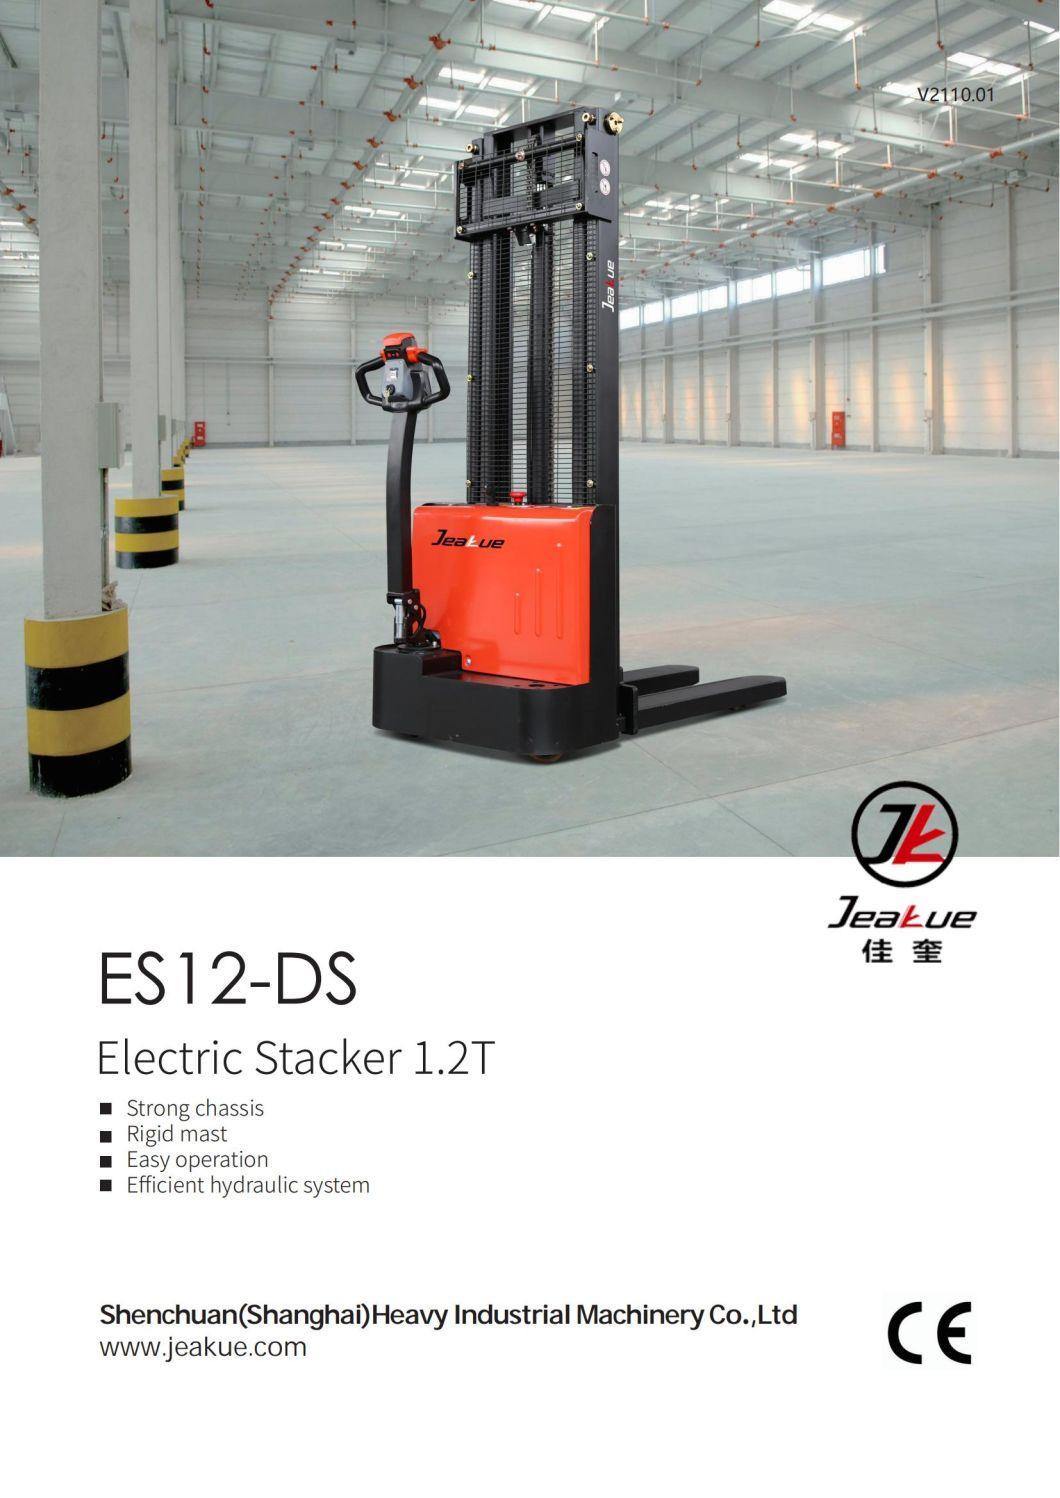 Very Cheap But Soild Electric Pallet Stacker 1.2t